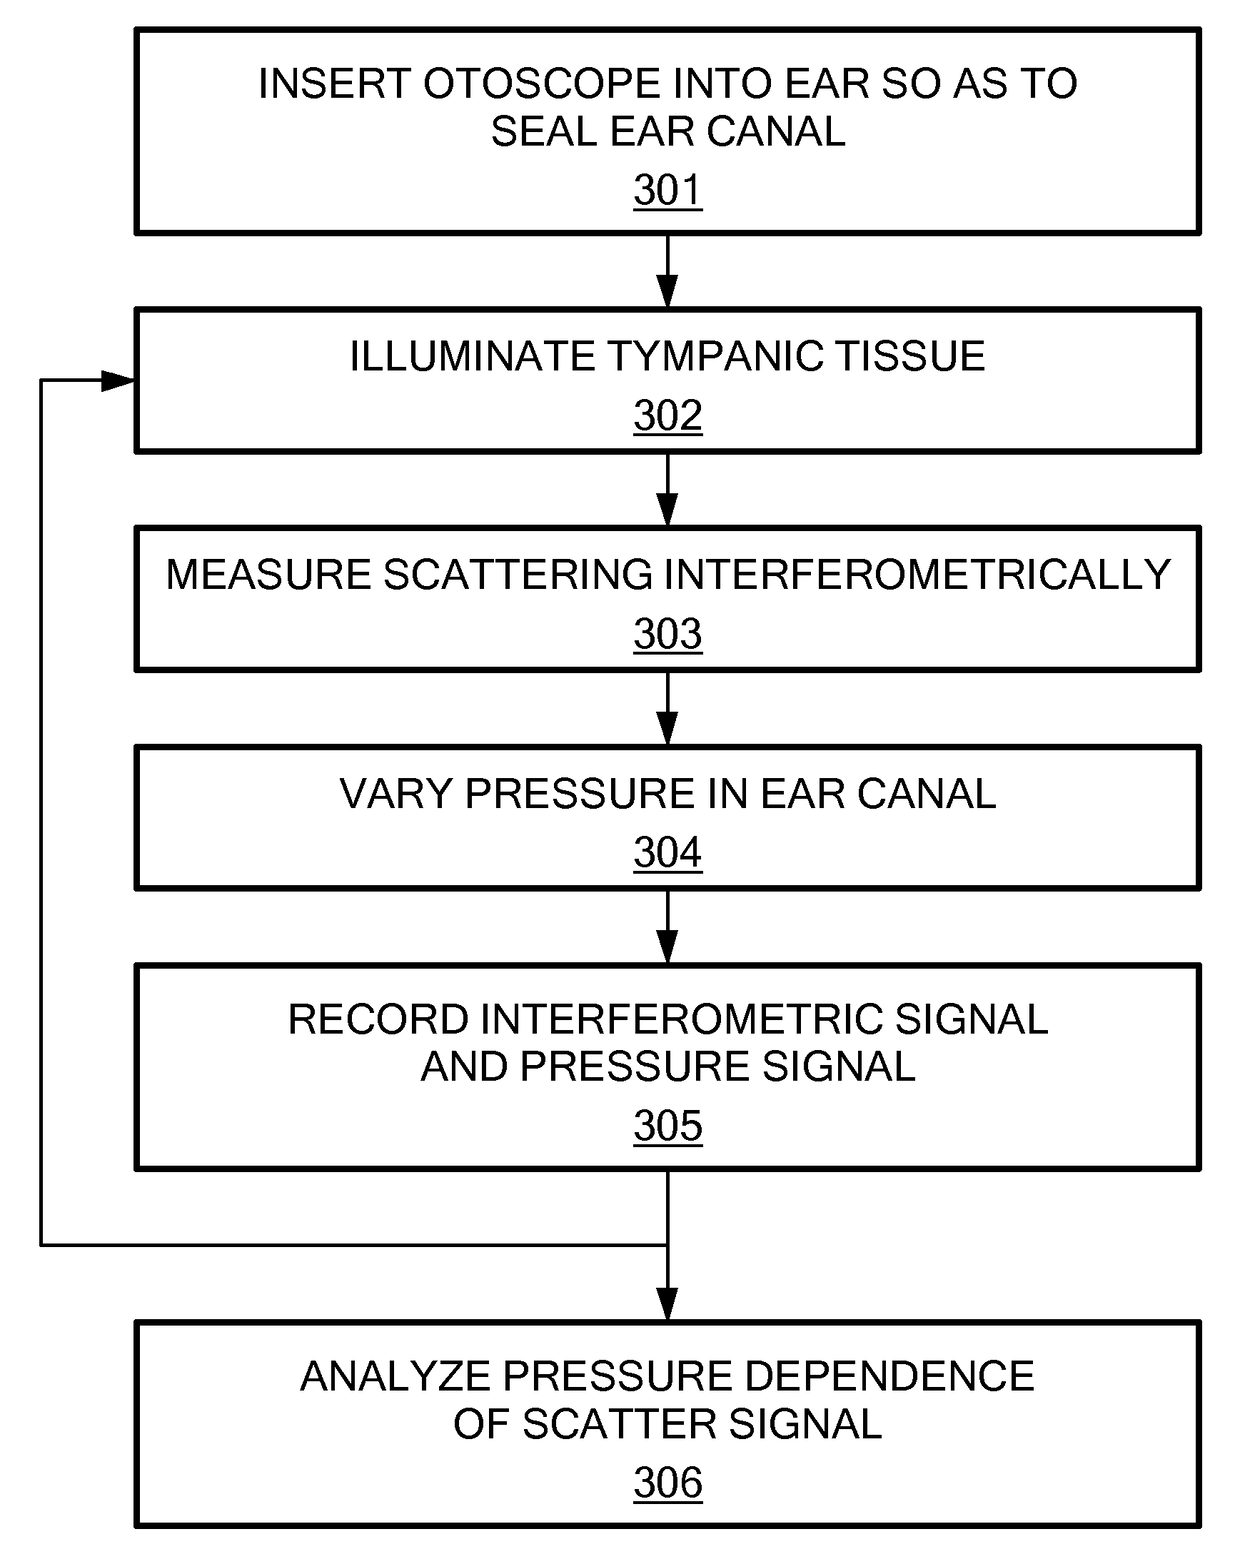 Quantitative pneumatic otoscopy using coherent light ranging techniques